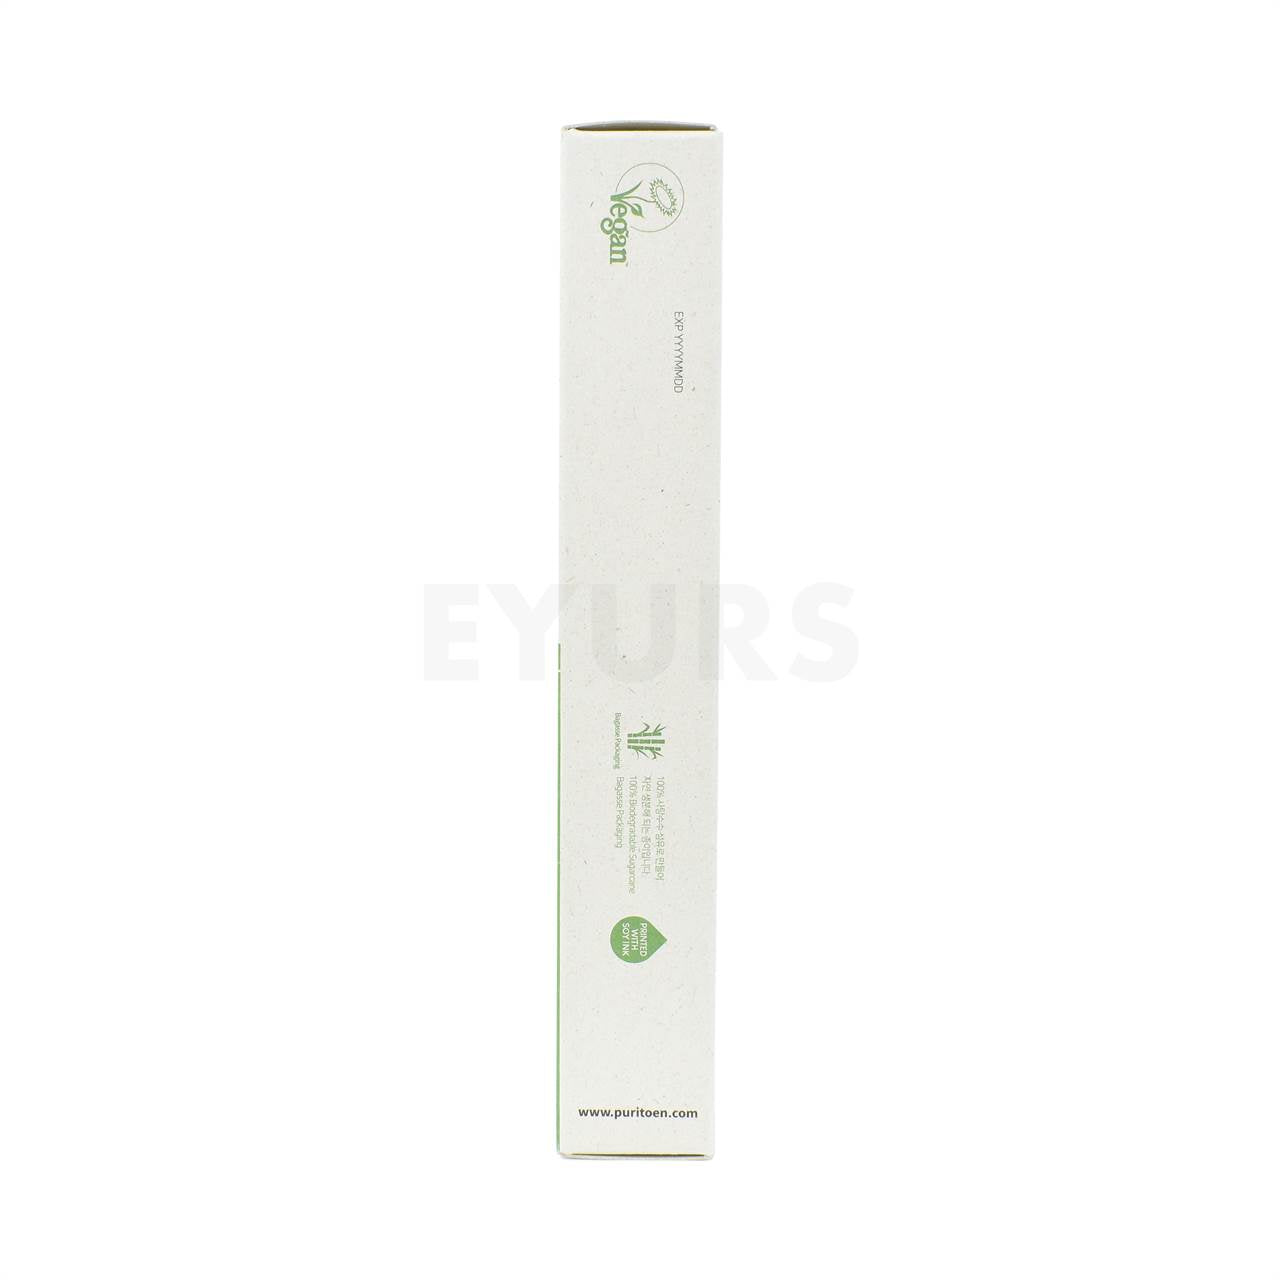 purito centella green level eye cream 30ml left side packaging